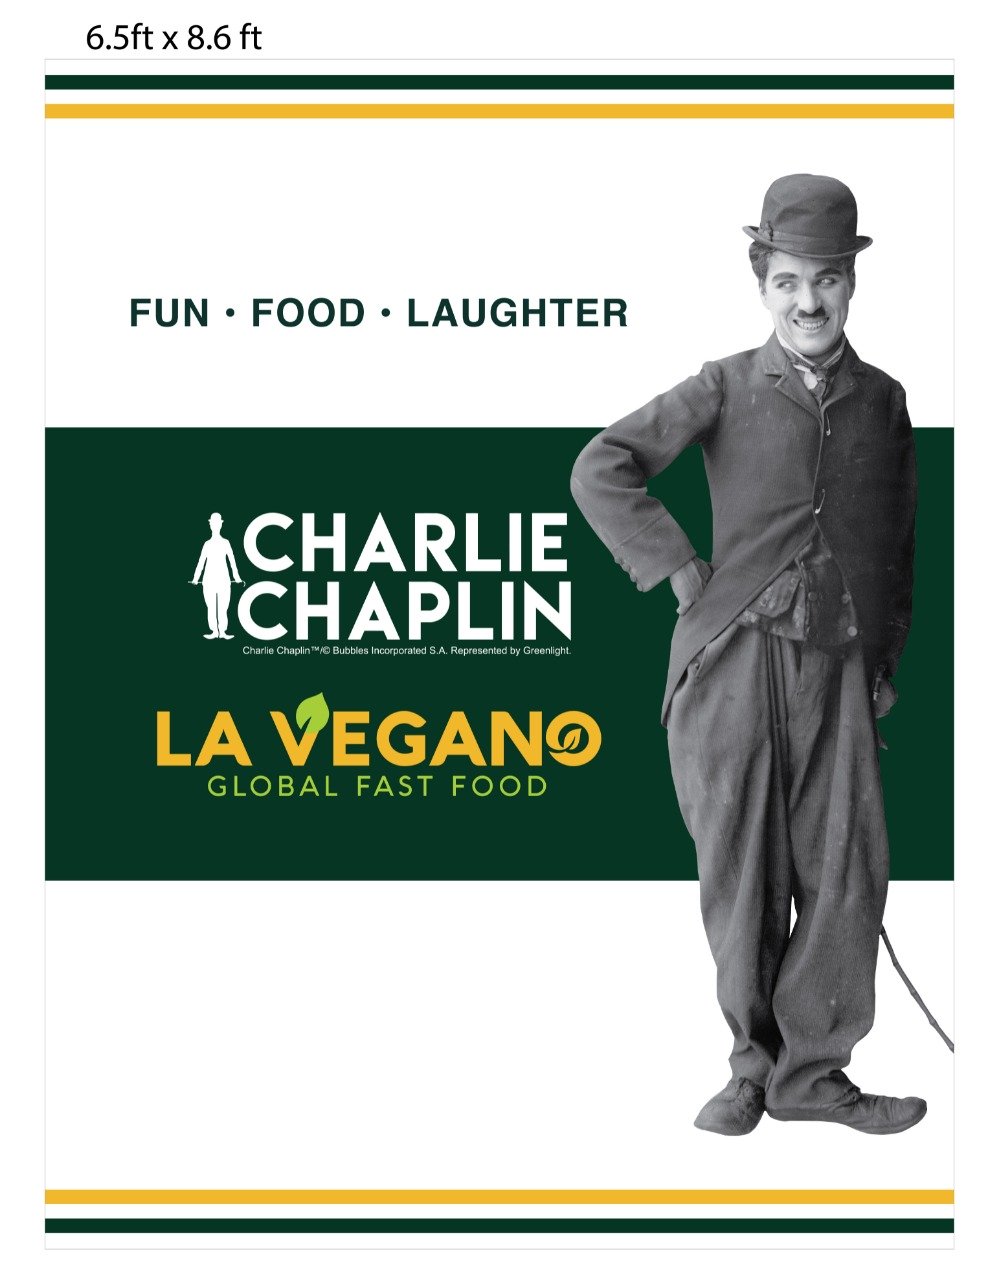 Charlie Chaplin LaVegano - Global Fast Food logo